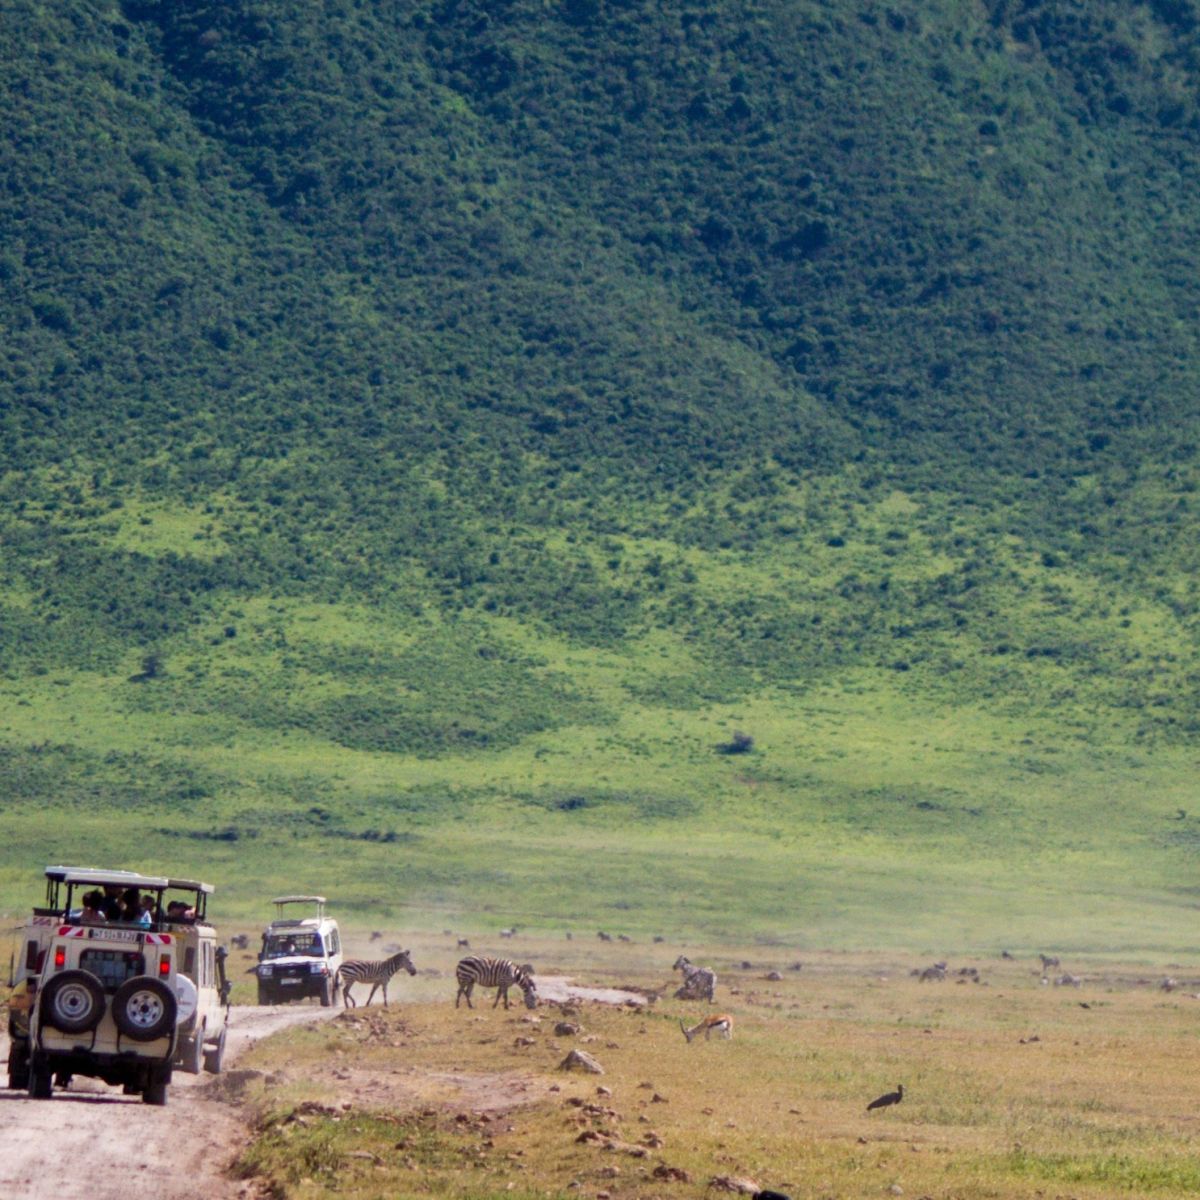 Safari vehicle on game drive in Ngorongoro Crater